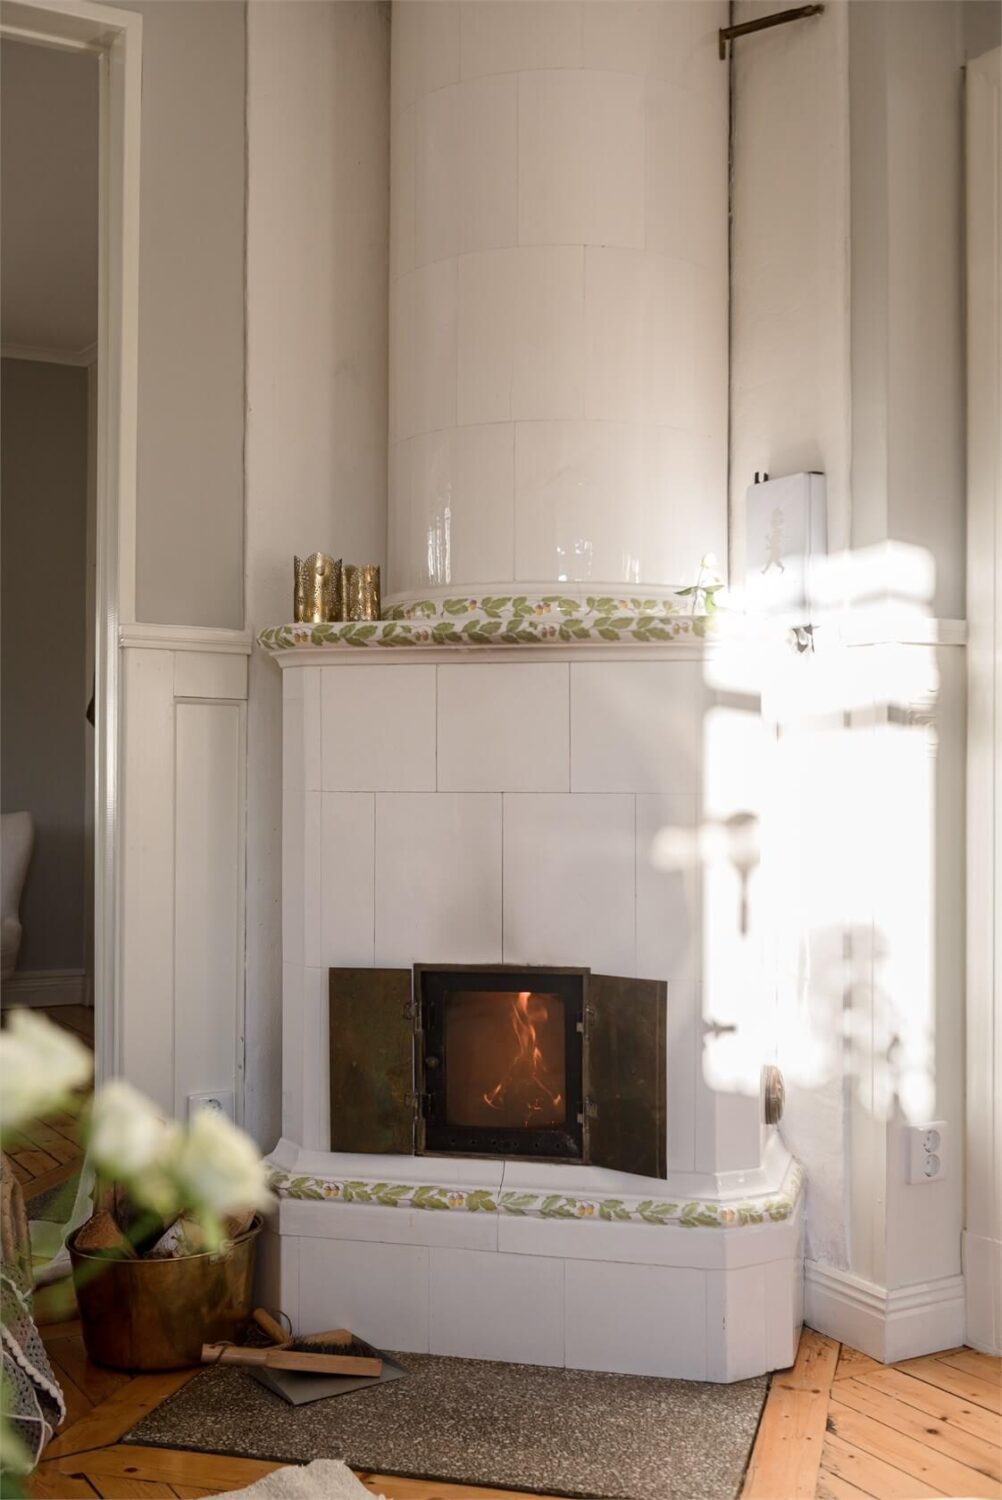 kakelugn-swedish-tiled-fireplace-nordroom